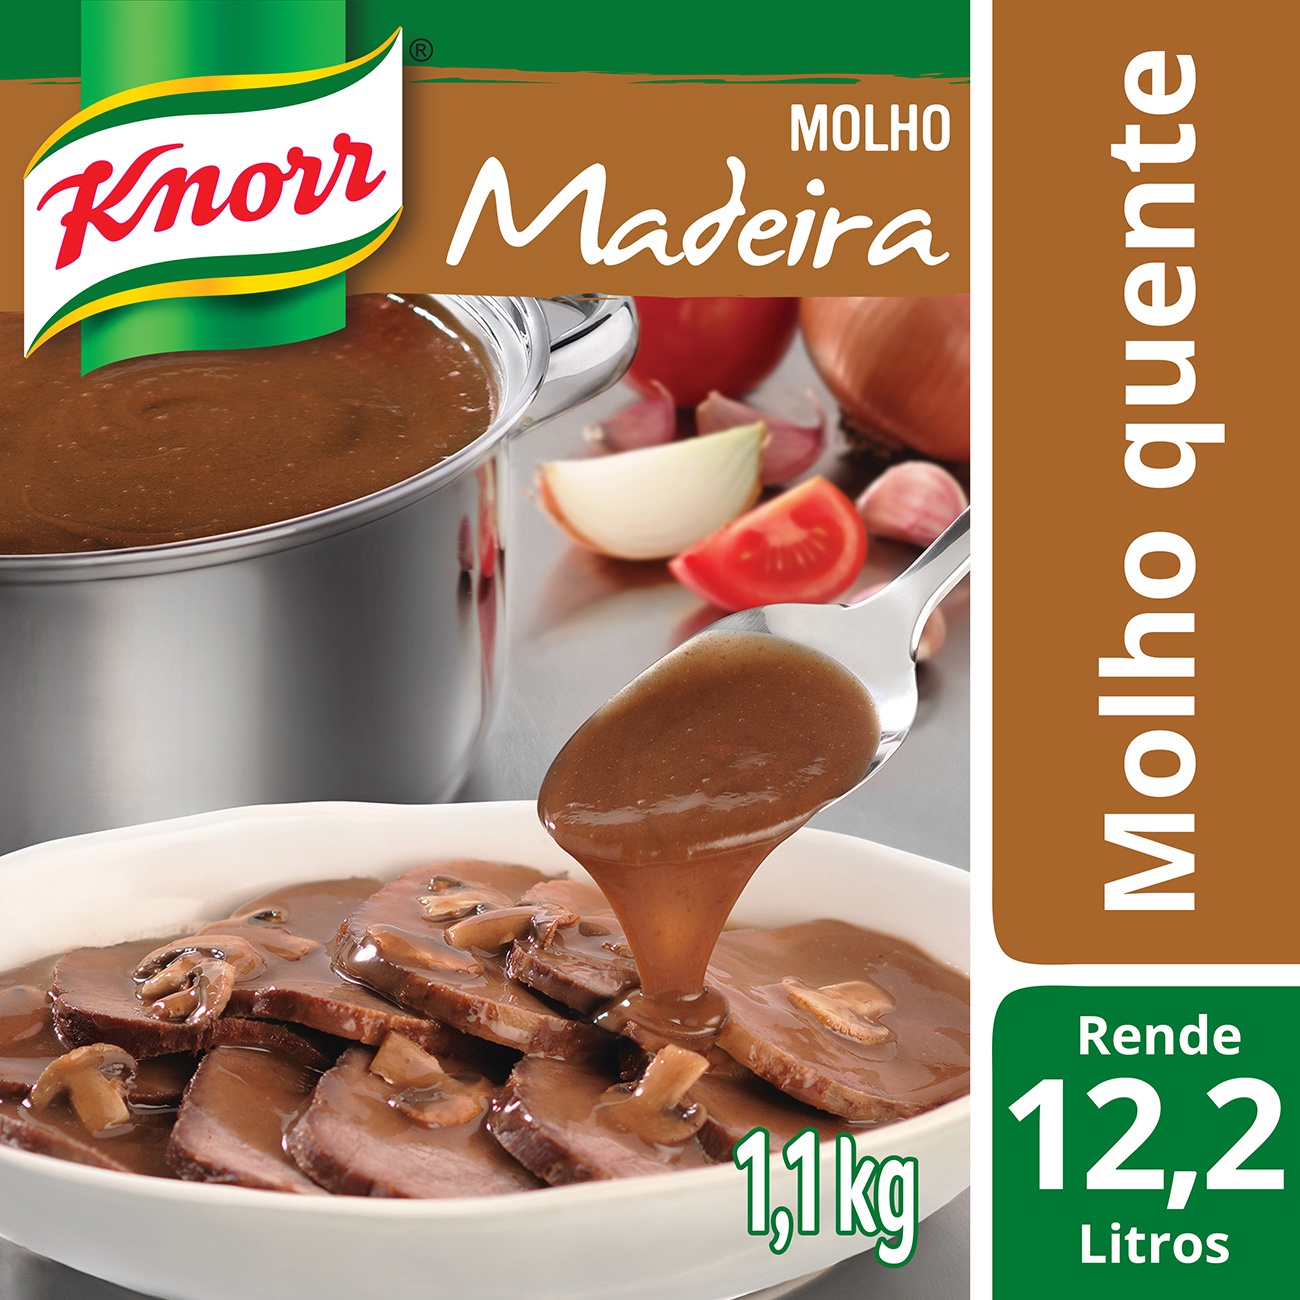 Molho Madeira Knorr 1,1kg